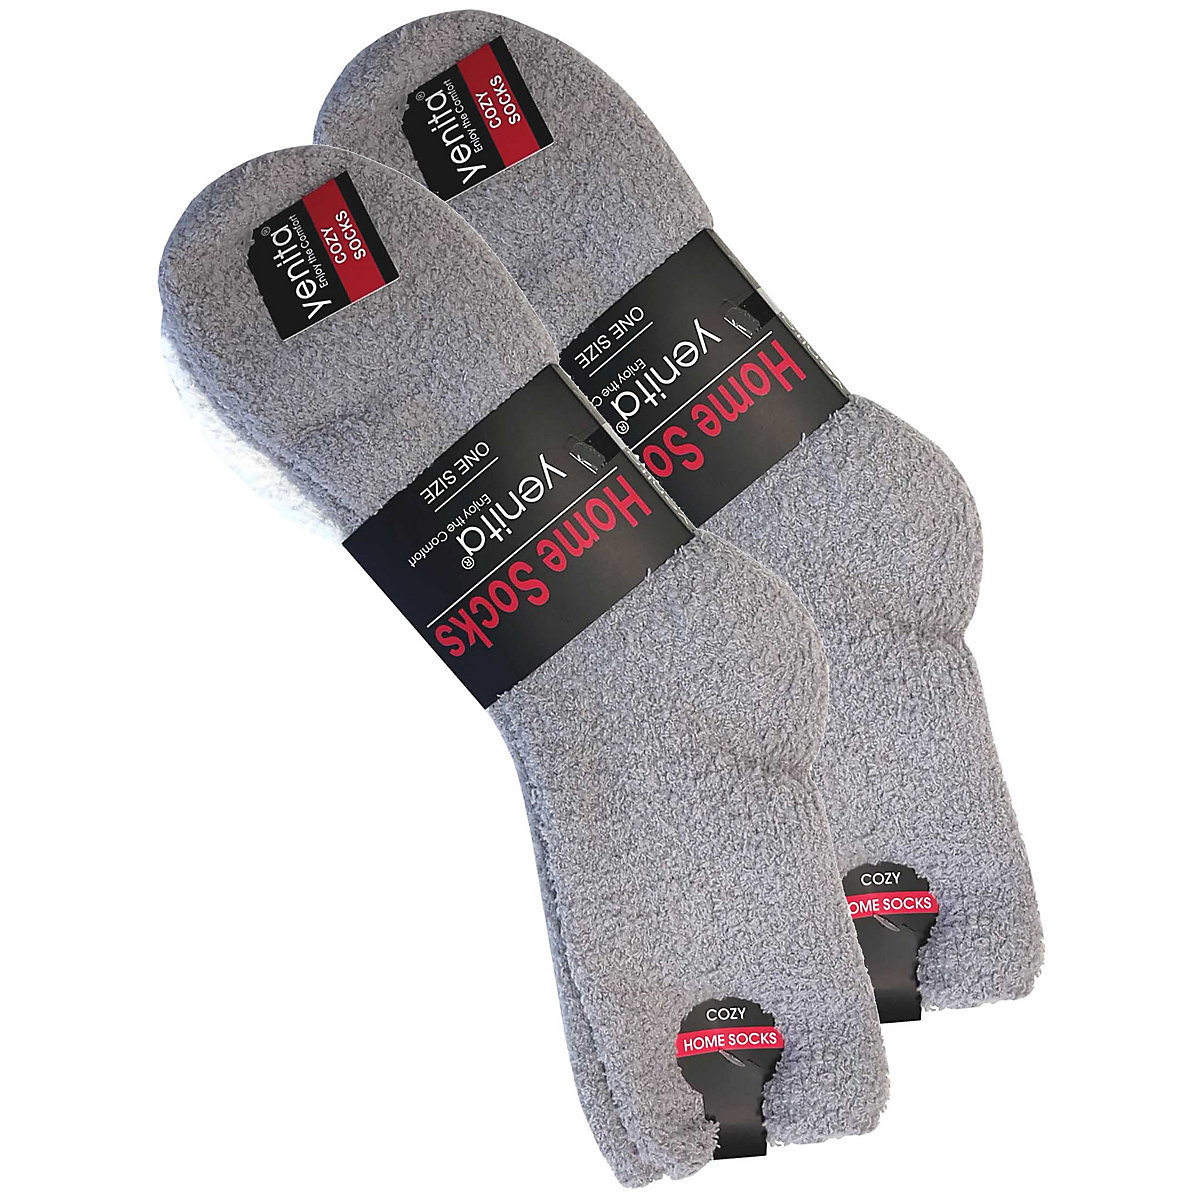 yenita® Kuschelsocken 4 Paar Socken grau/weiß